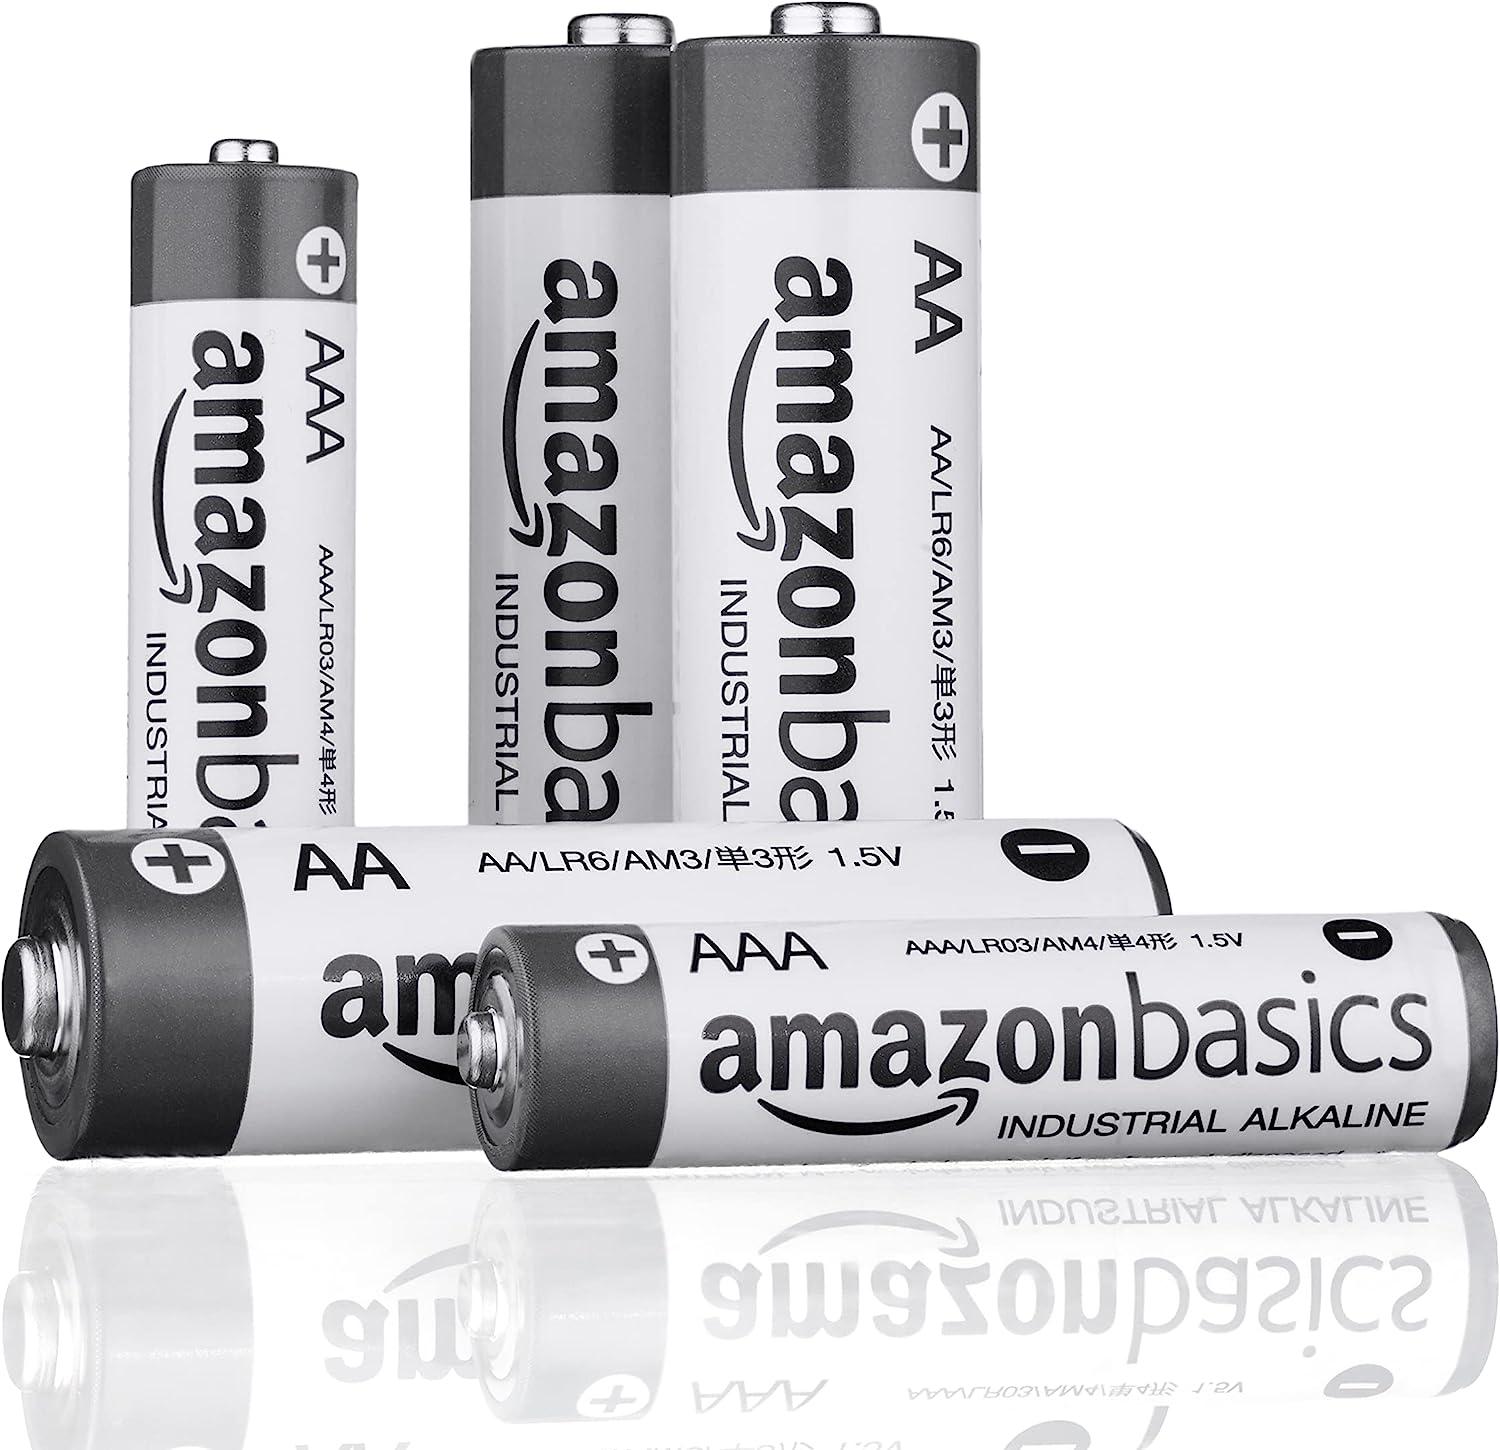 Alkaline AA batteries (LR6) - 3 pack